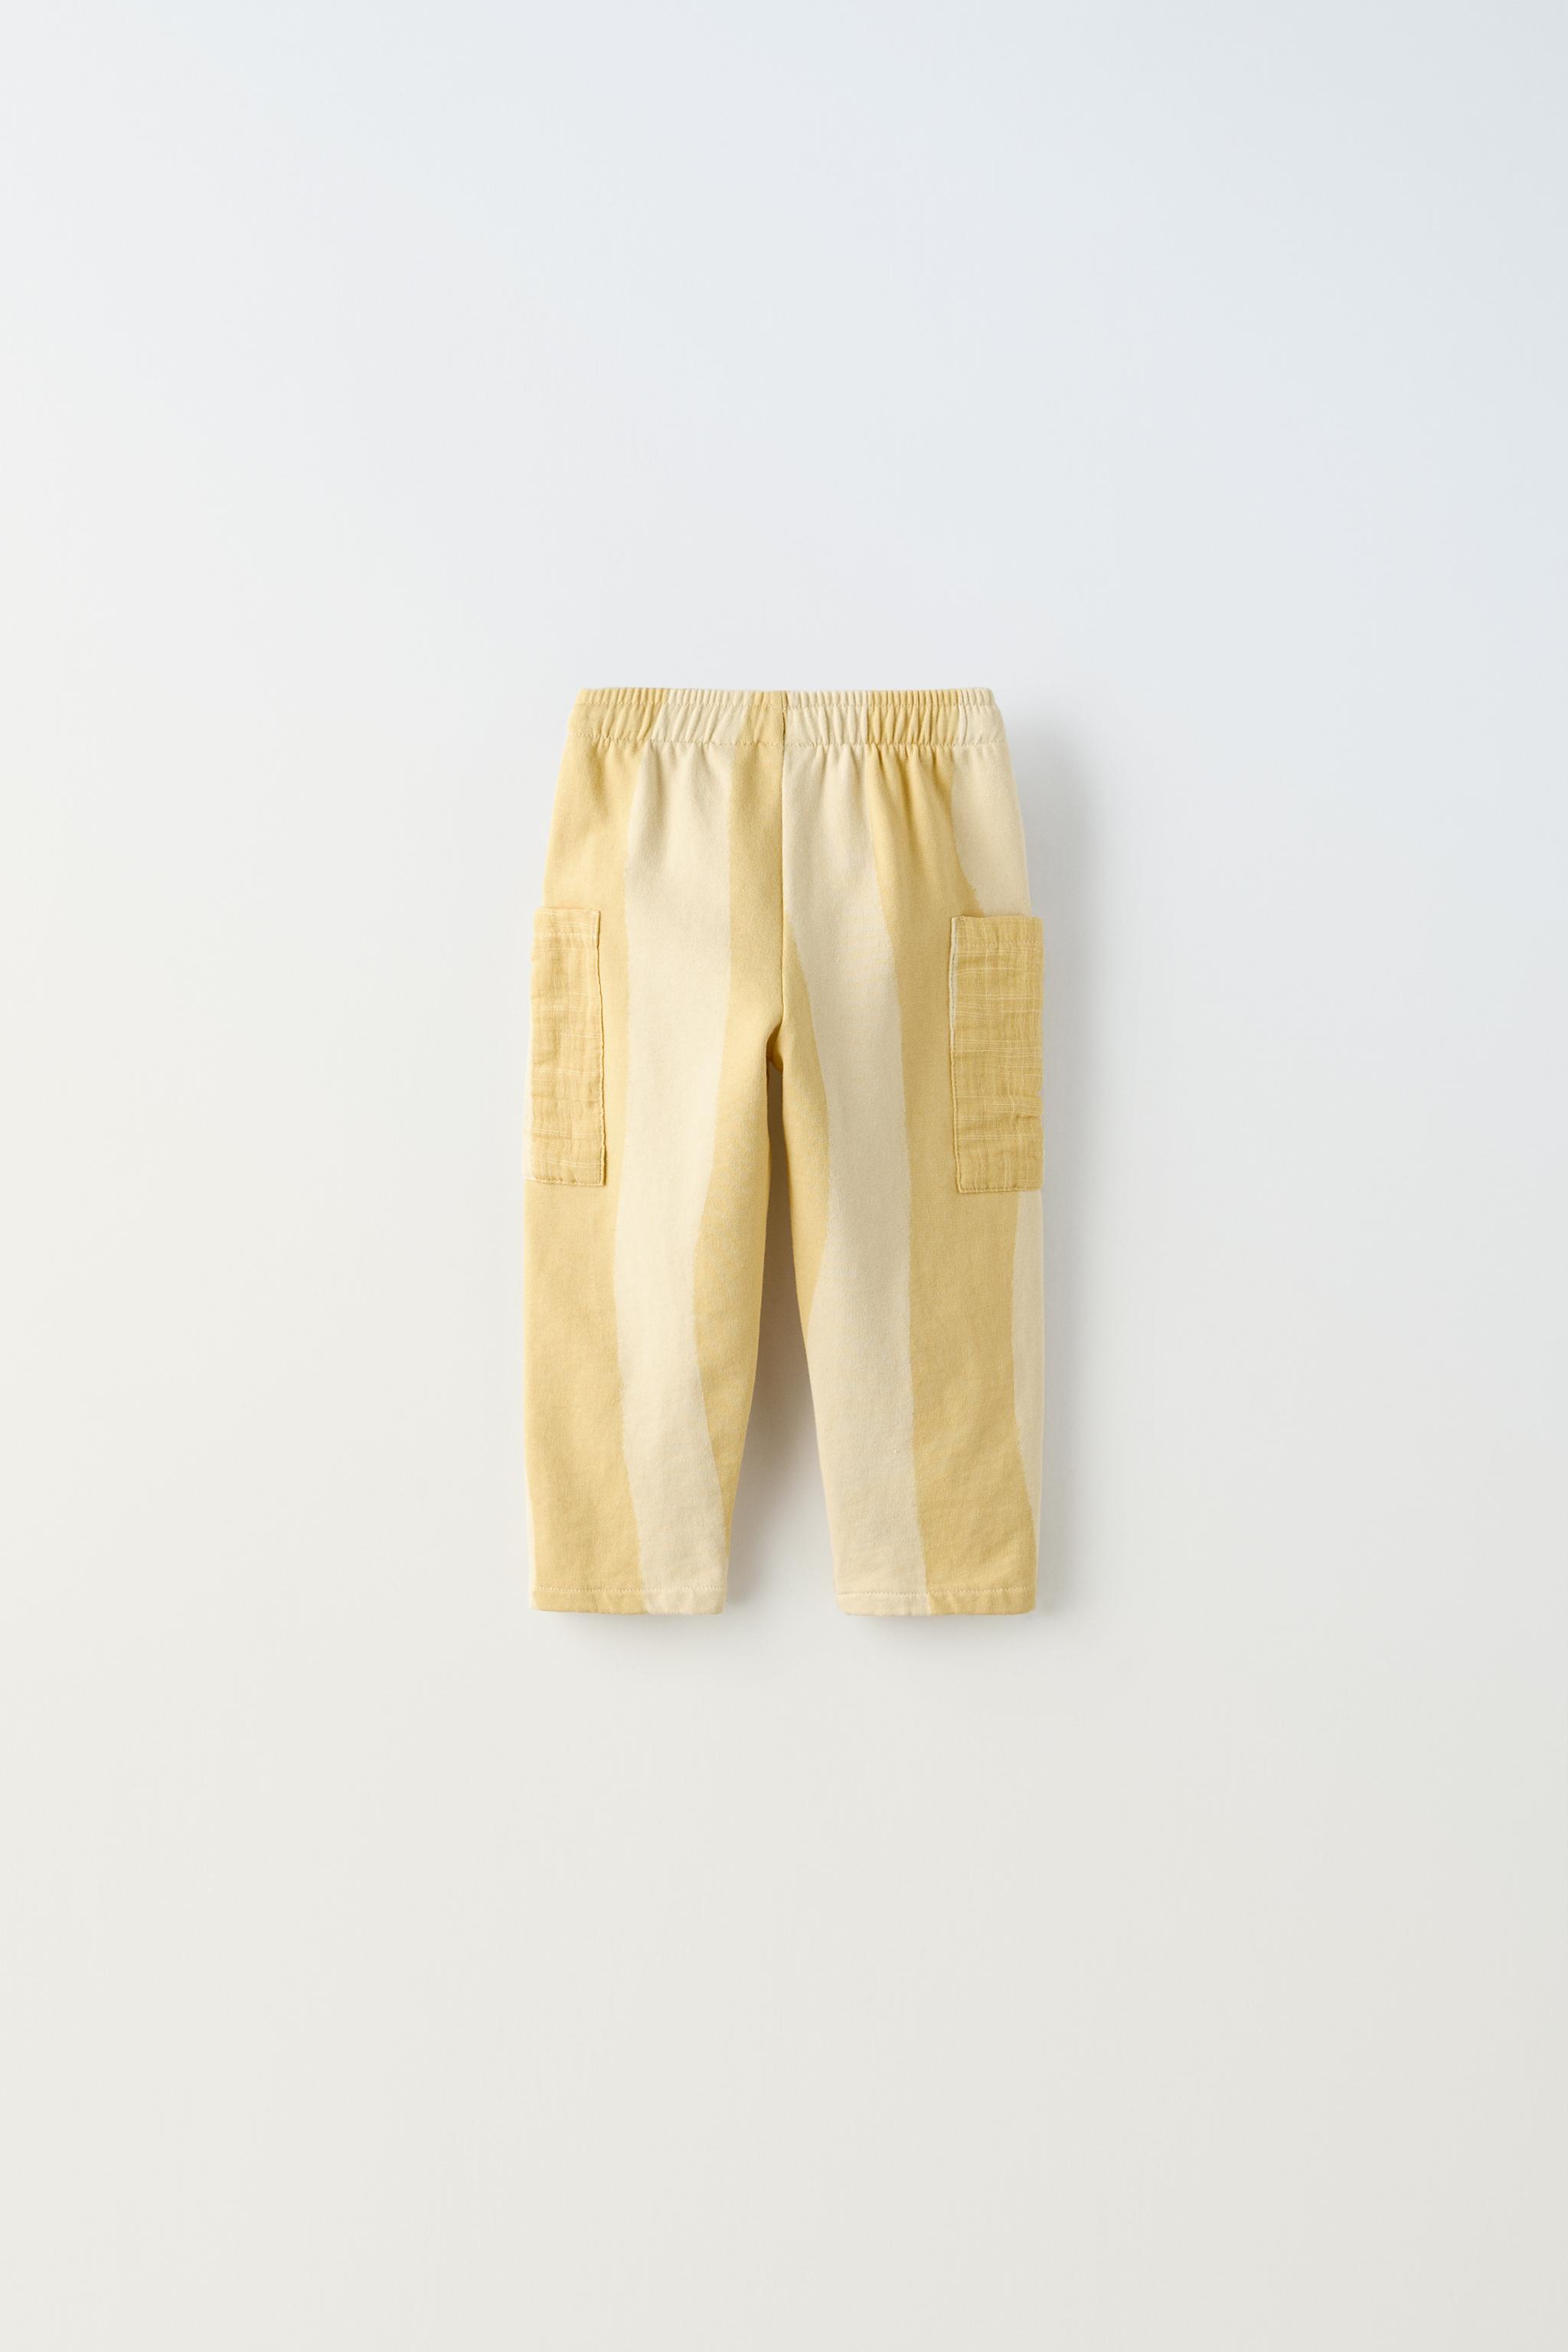 STRIPED POCKET PANTS - Ecru/Yellow | ZARA United States